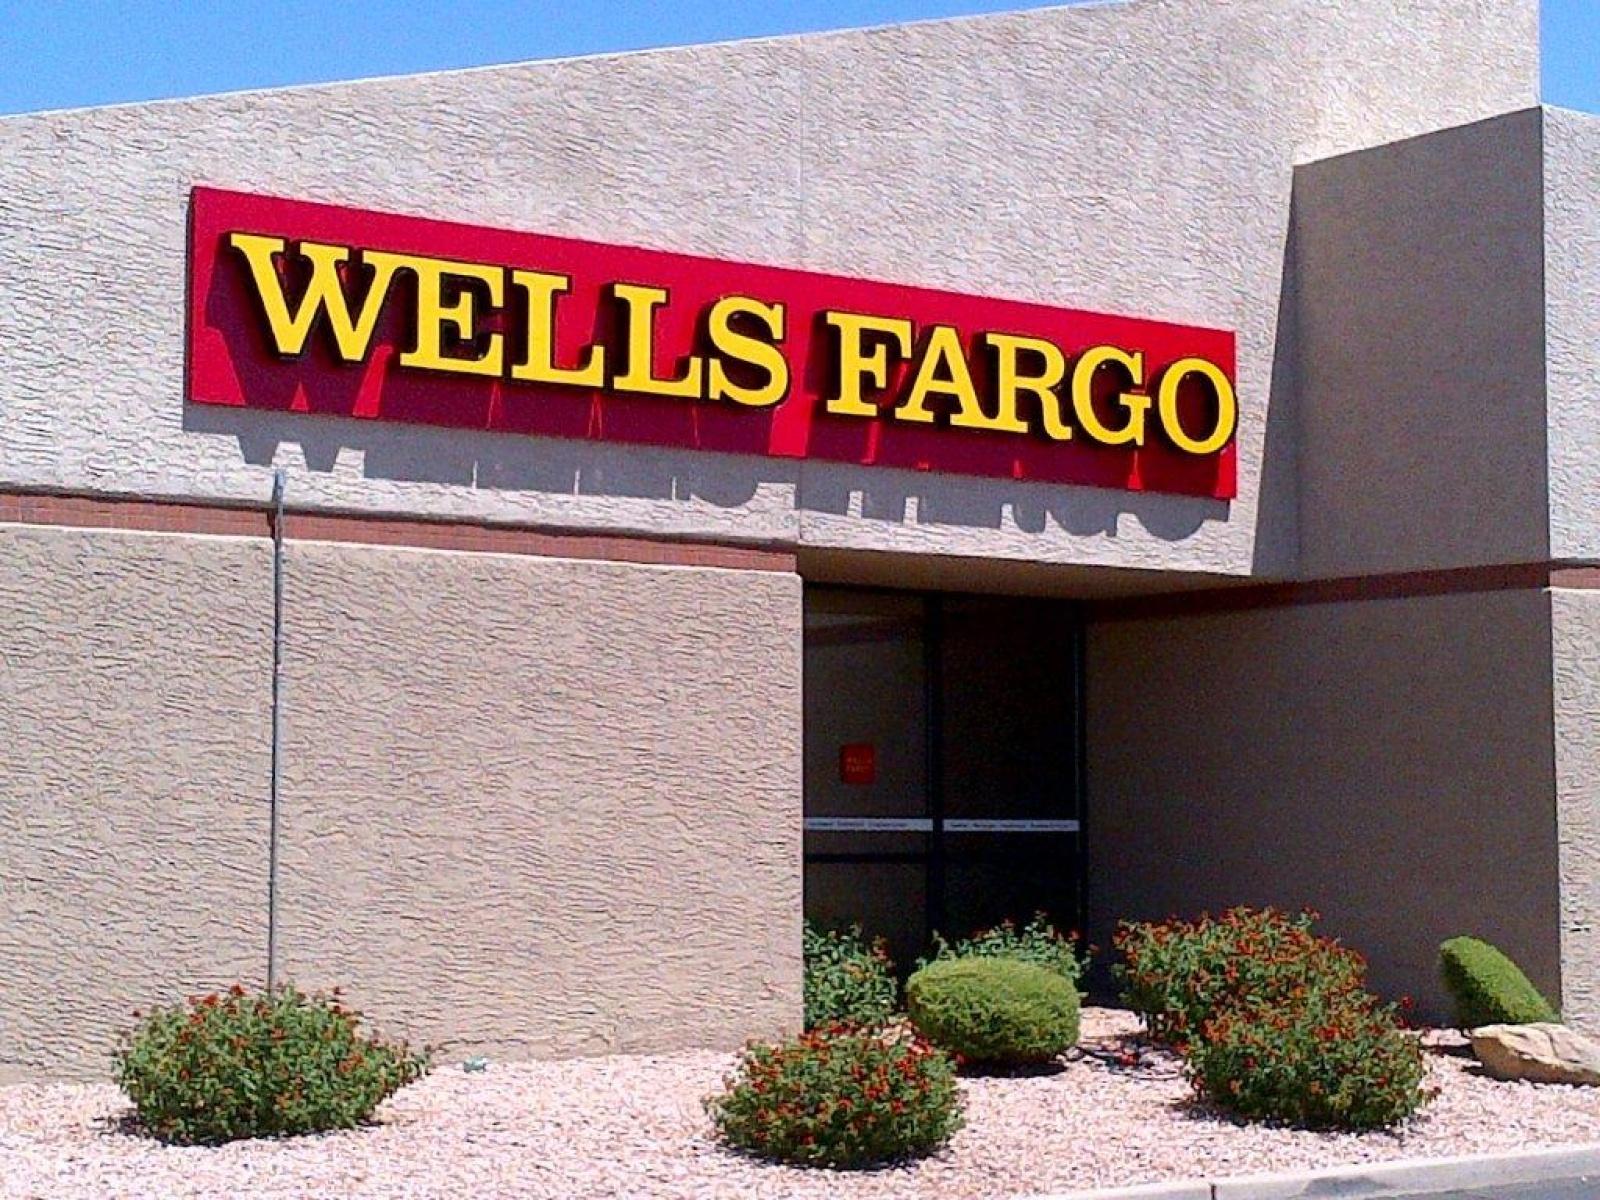 Wells Fargo corporate signage